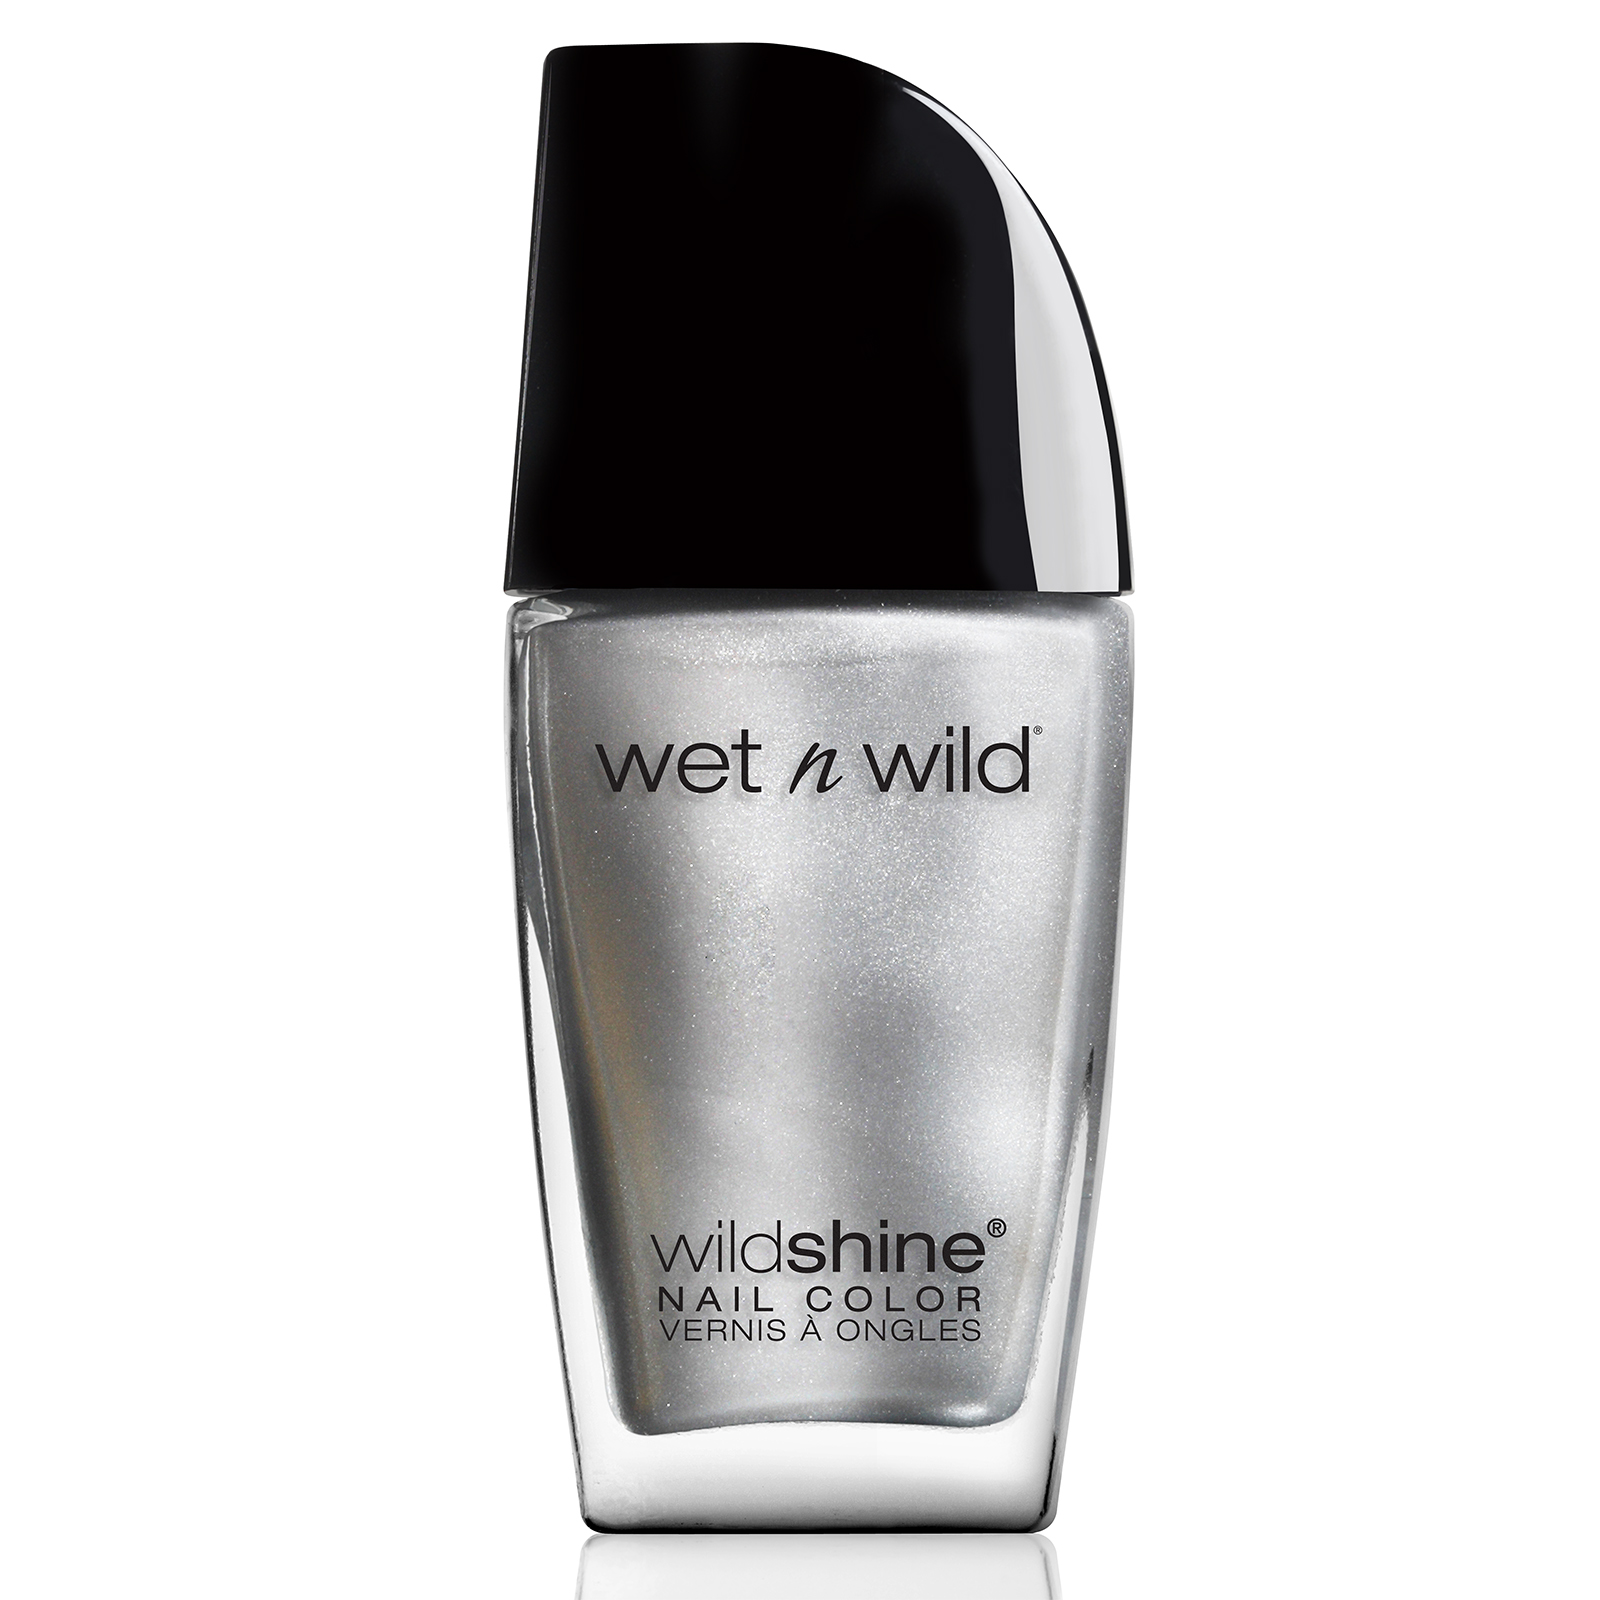 Wet n Wild Wild Shine Nail Color